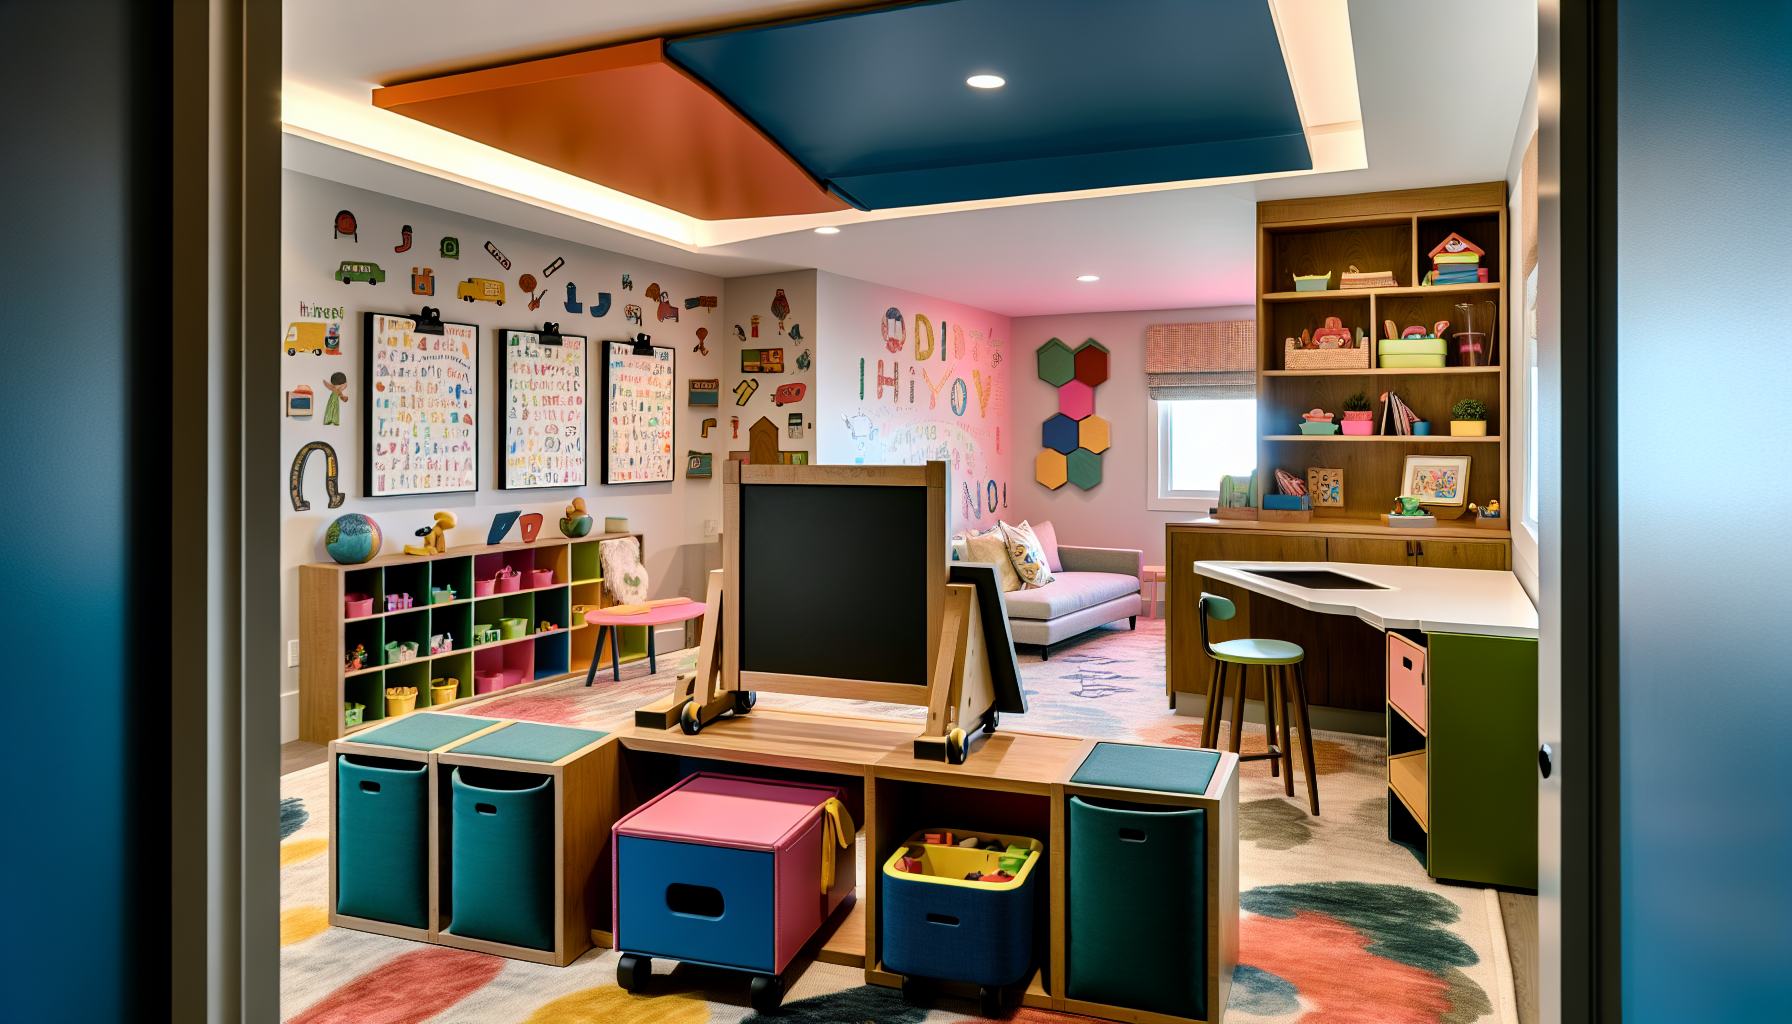 Multi-functional furniture for playroom organization